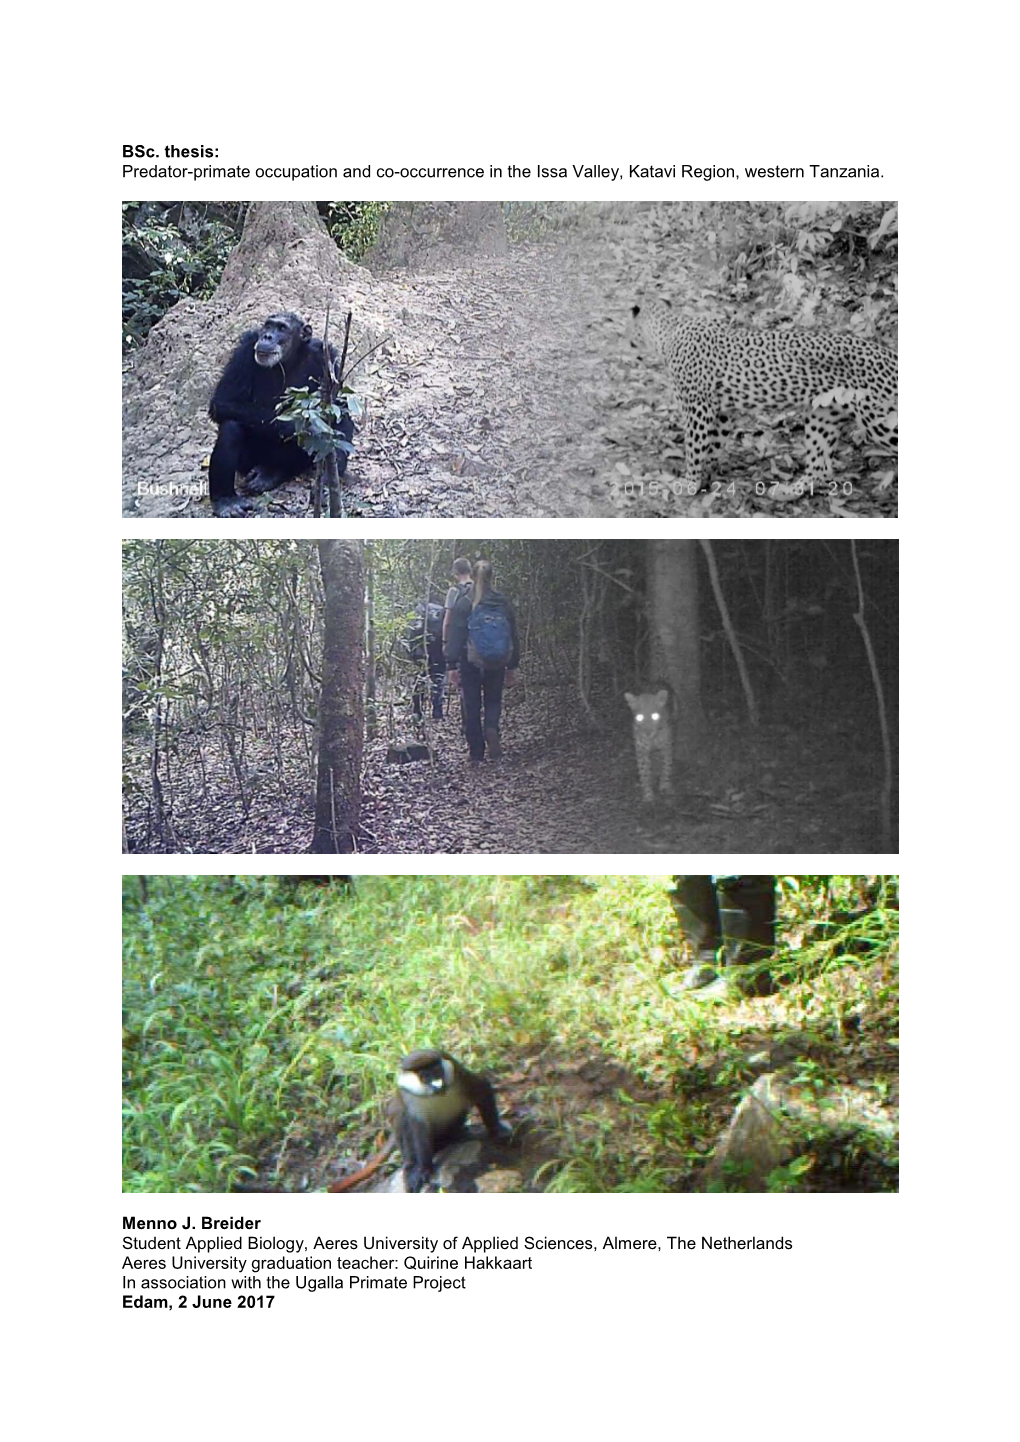 Predator-Primate Occupation and Co-Occurrence in the Issa Valley, Katavi Region, Western Tanzania